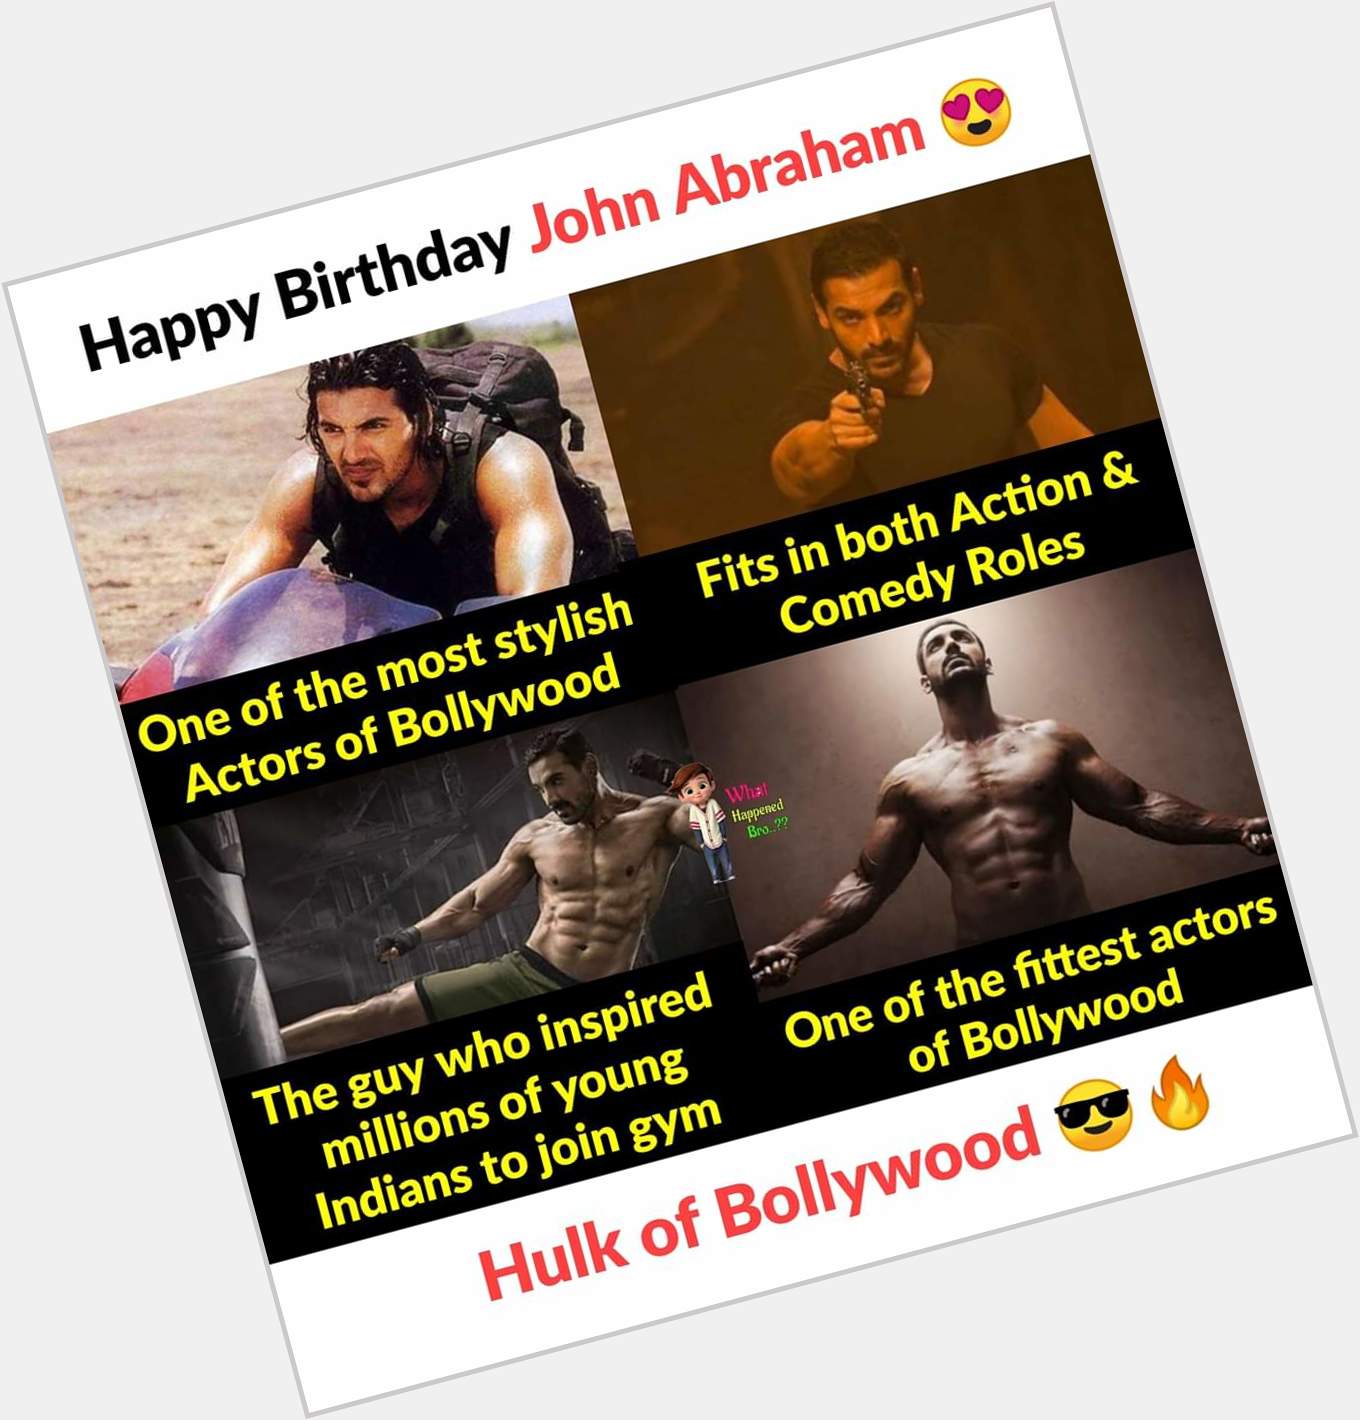 Happy birthday John Abraham sir 